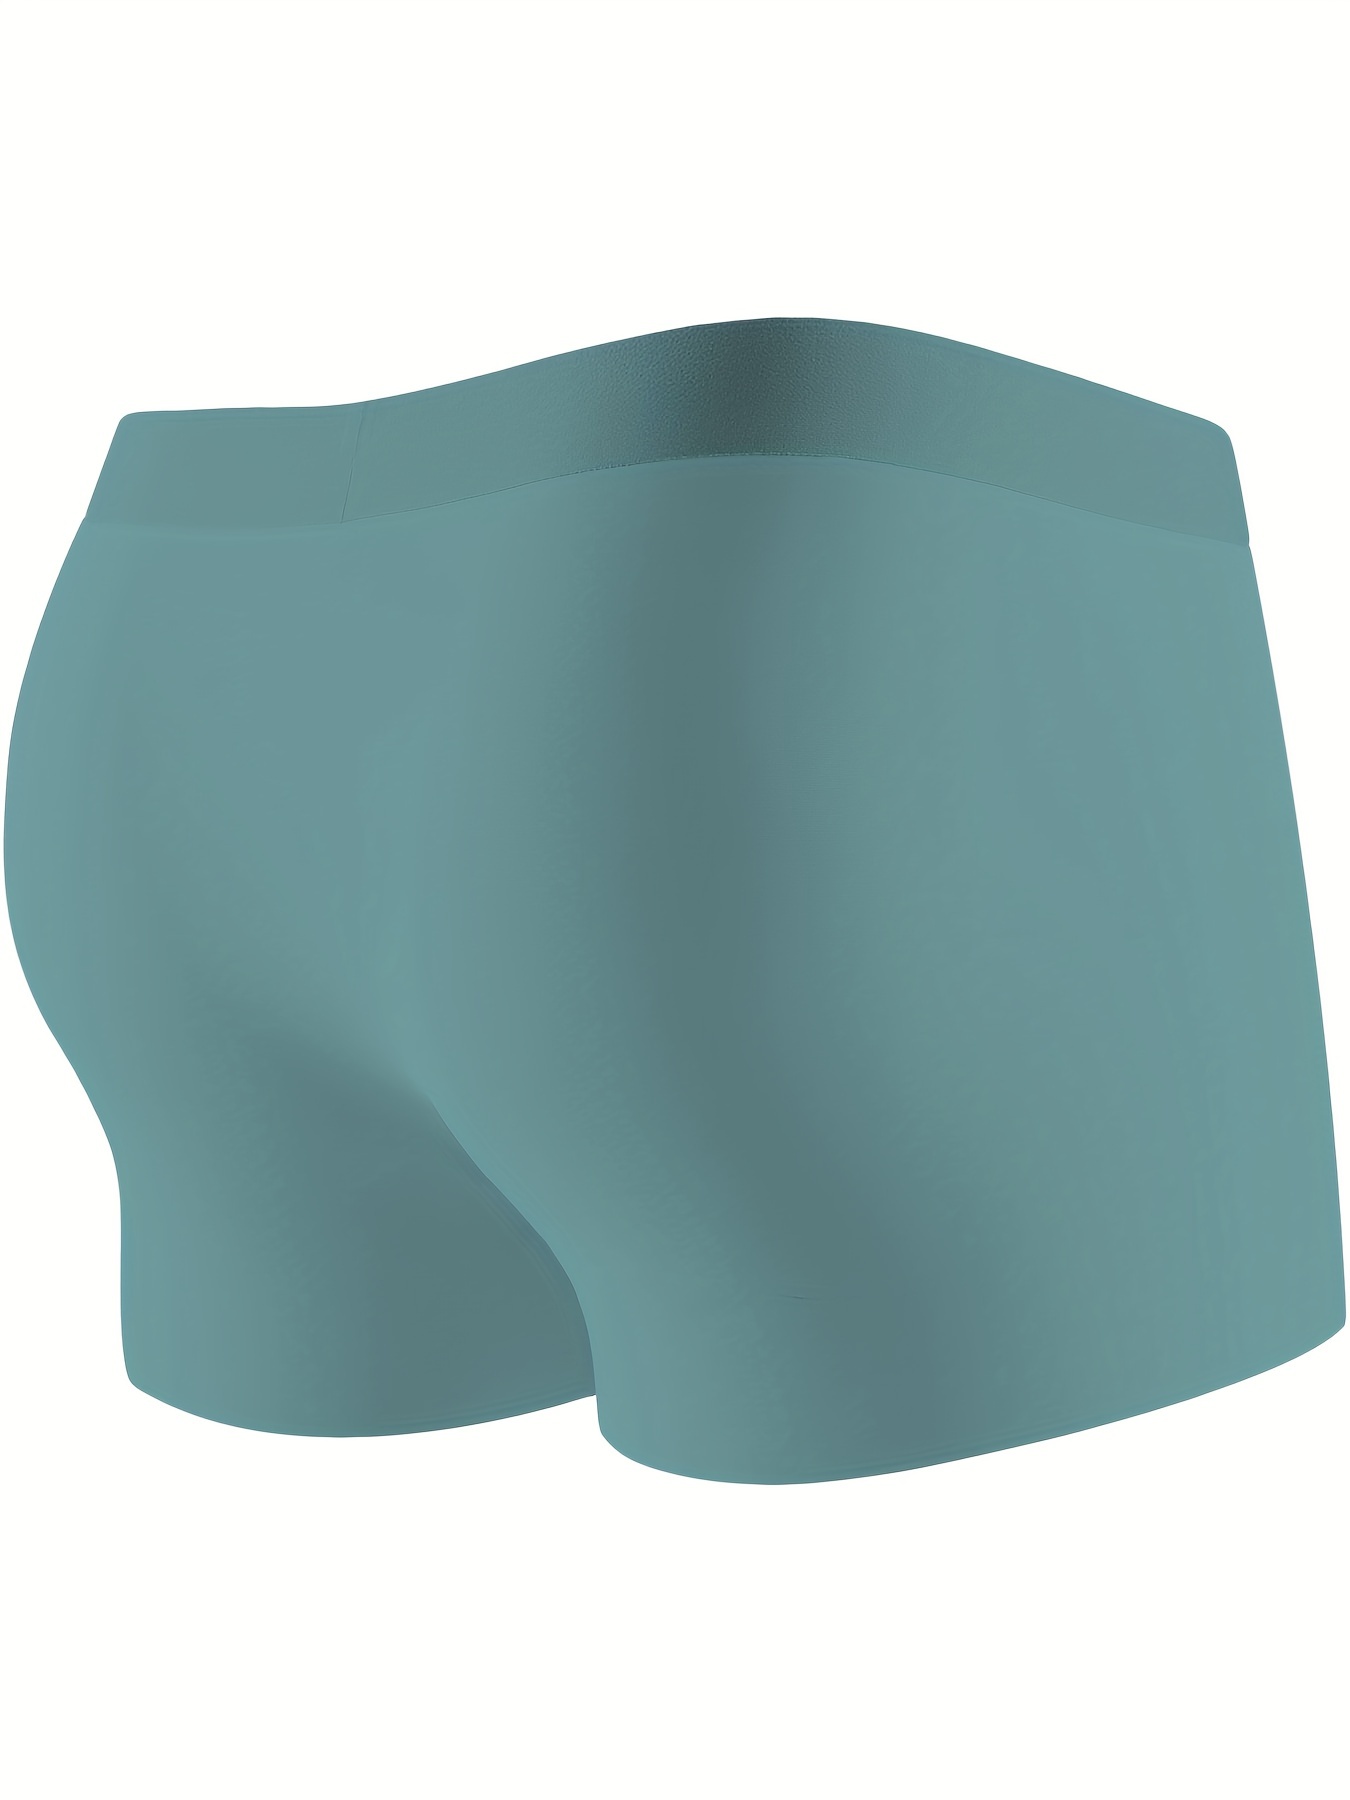 Qoo10 - MIIOW Mens Underwear/Panties/Ice Silk Seamless Underwear/Breathable  An : Men's Clothing